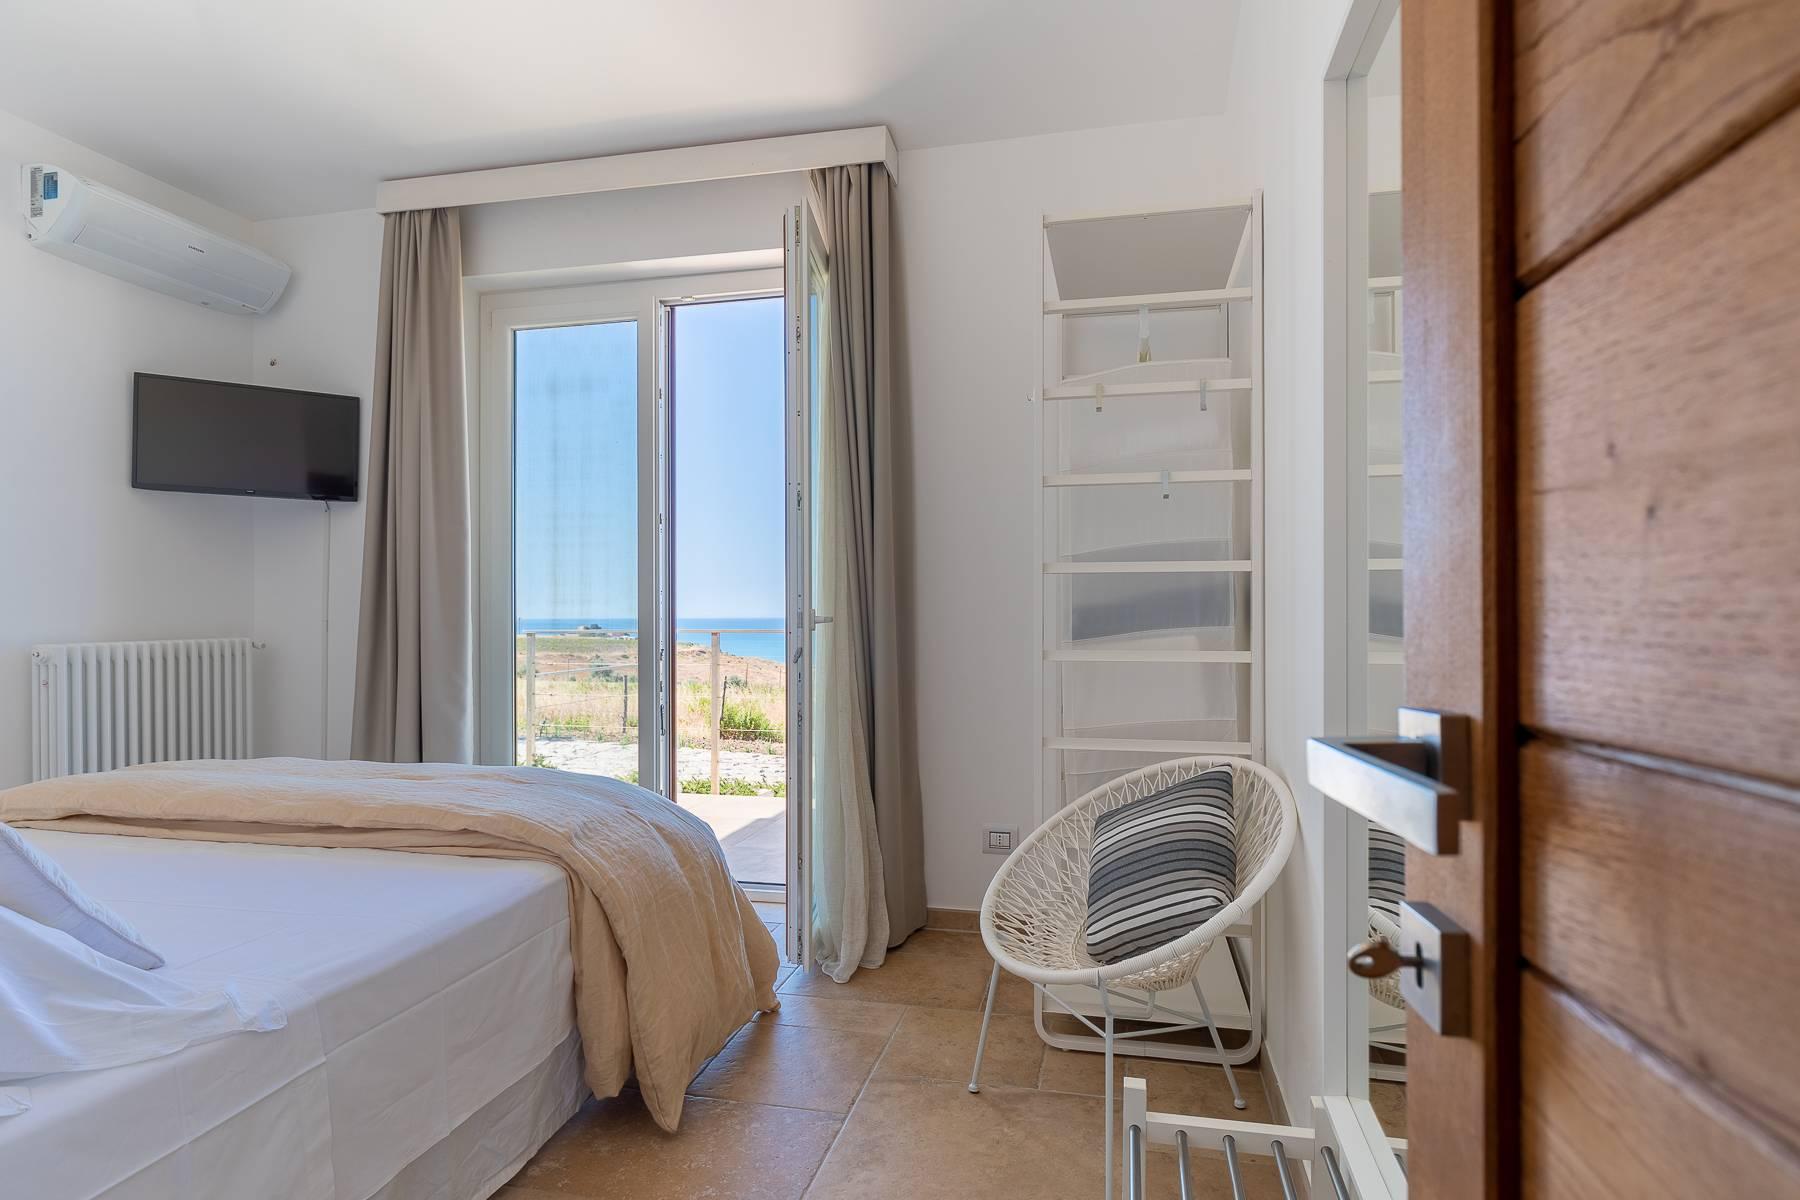 Exclusive villa with stunning views on the Mediterranean sea - 30